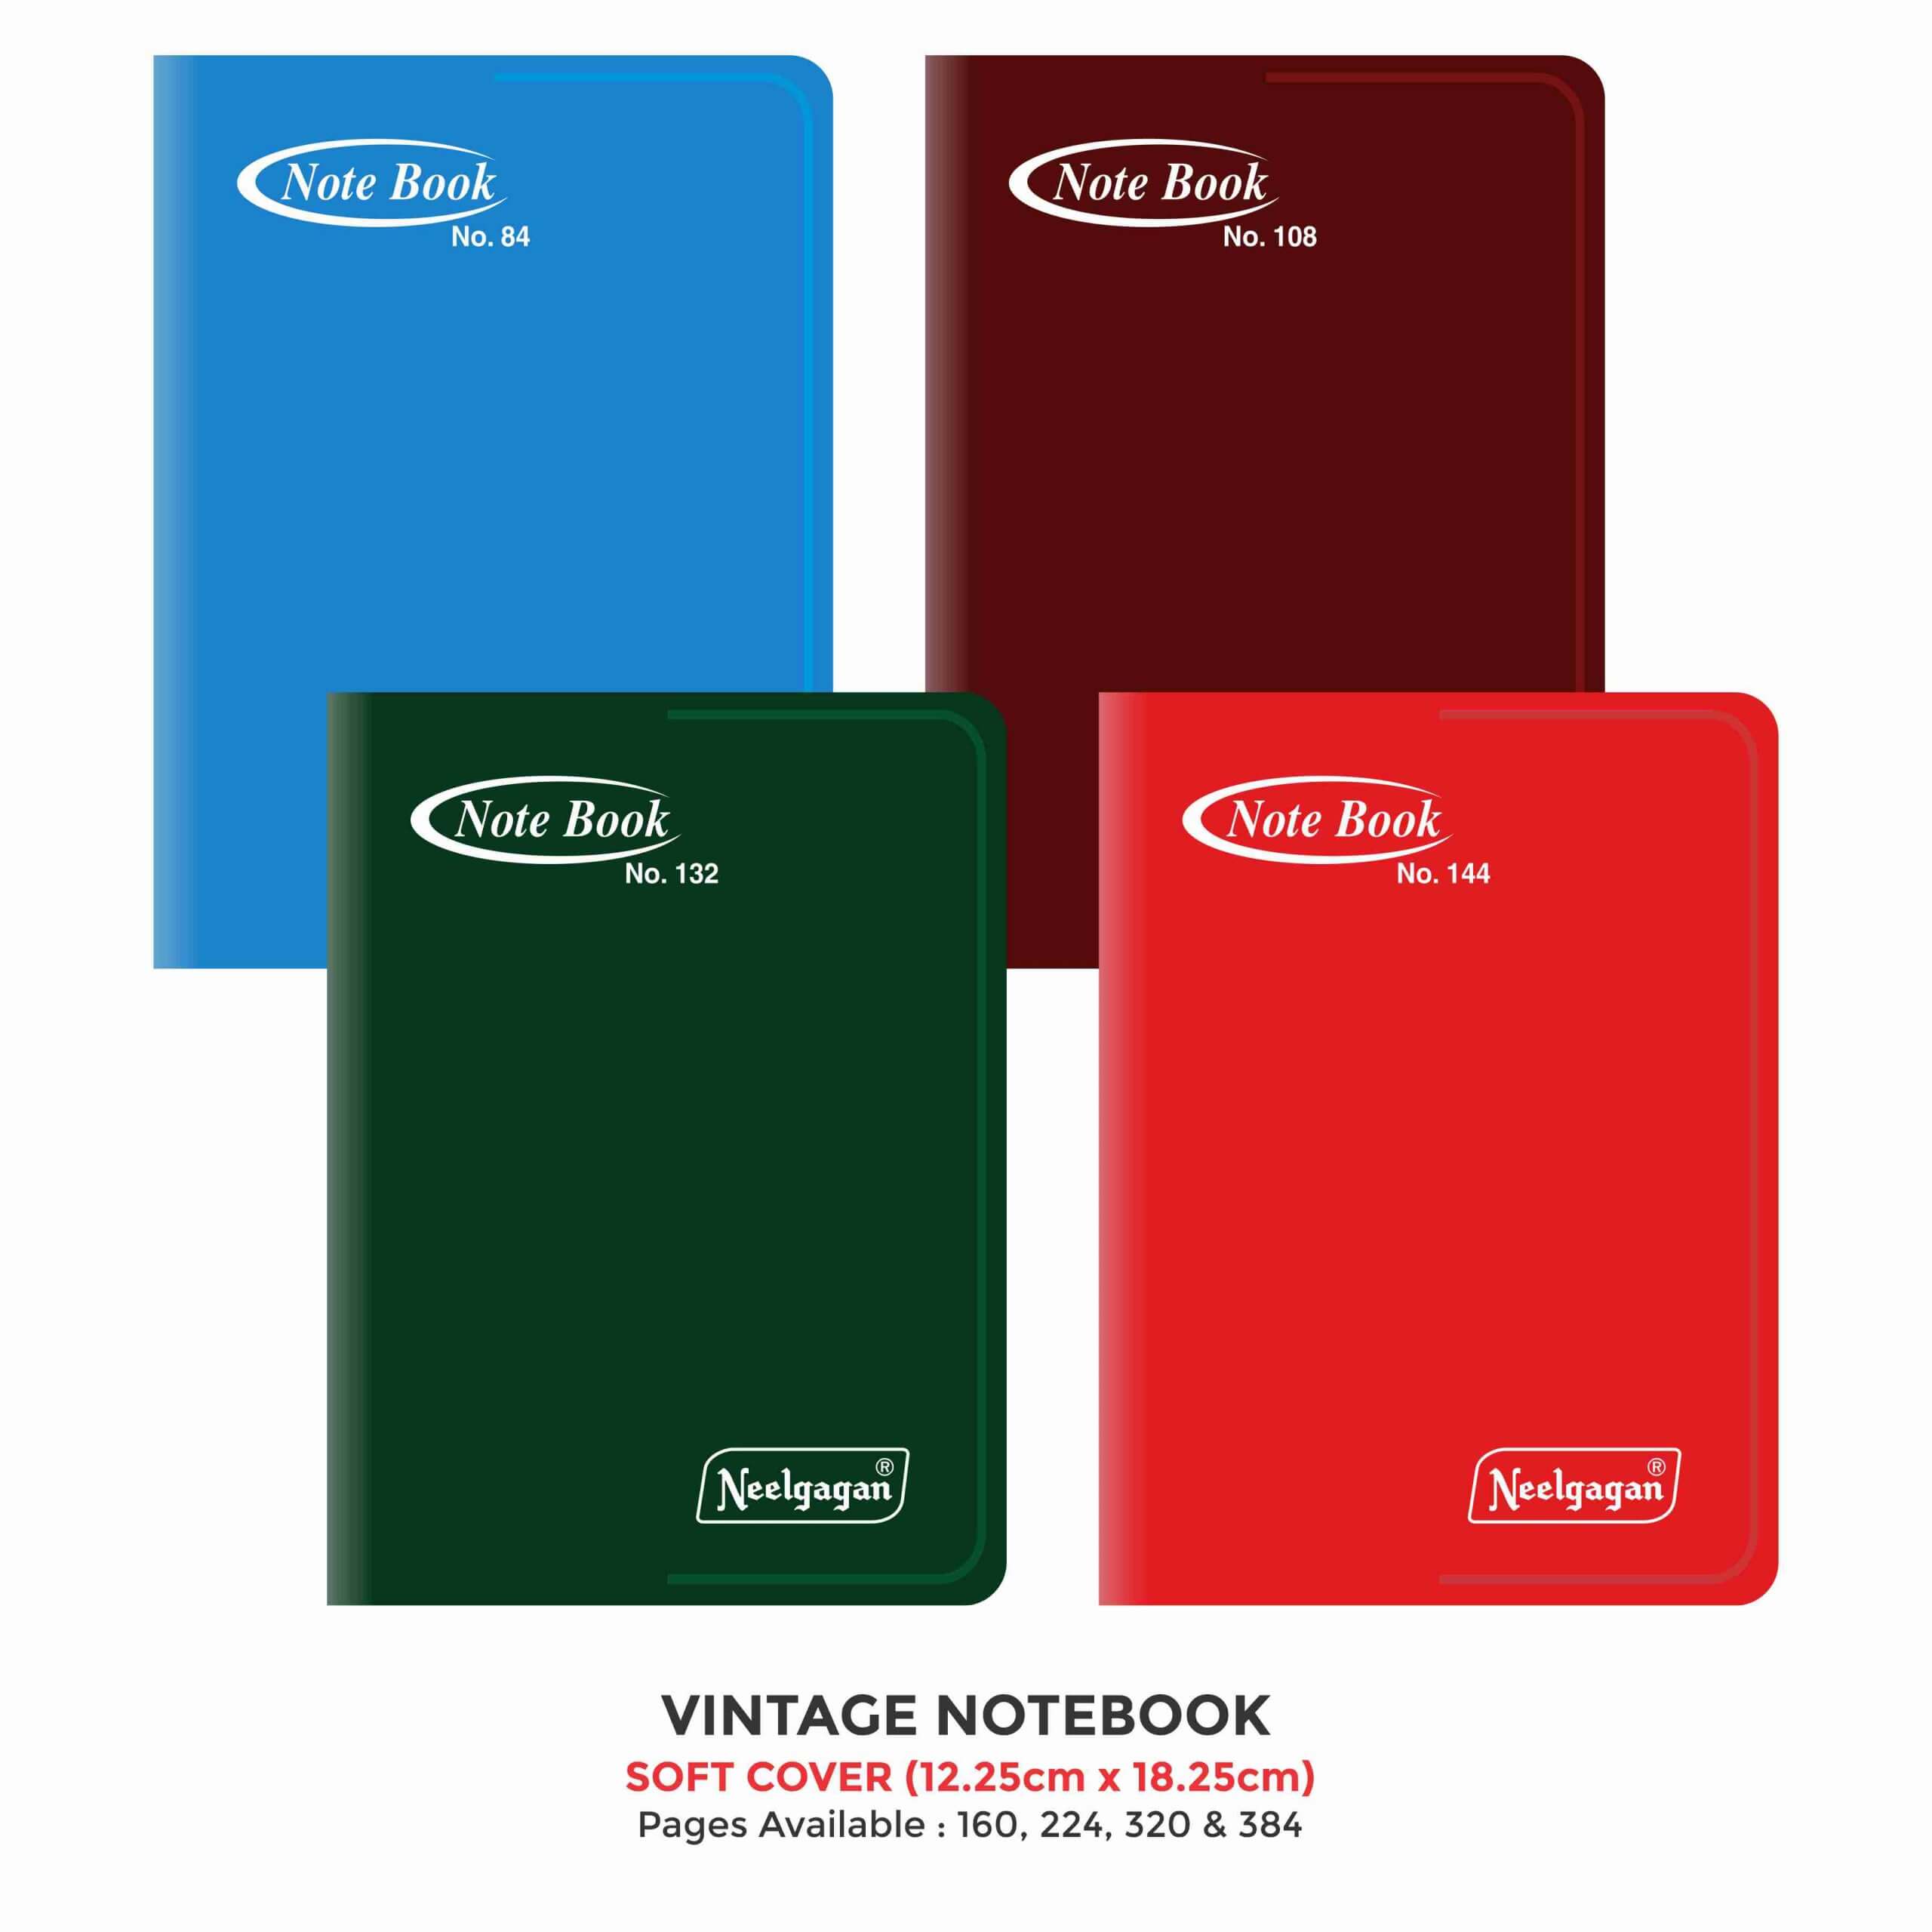 Vintage Notebook,(No. 84, 108, 132 & 144), (12.25 x 18.25cm) Soft Cover Plastic